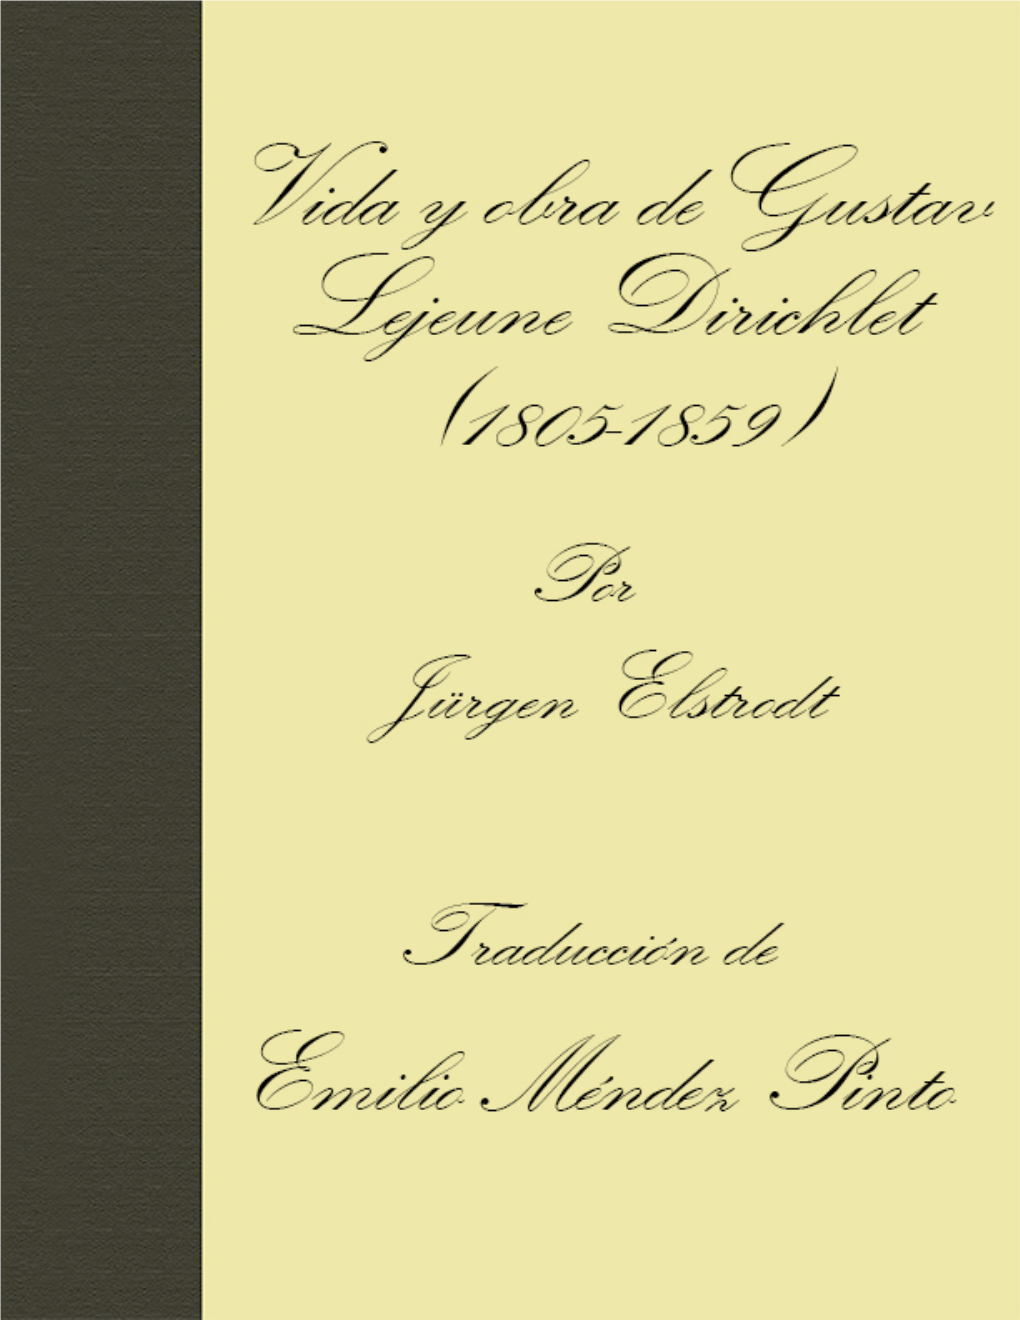 Vida Y Obra De Gustav Lejeune Dirichlet 1805-1859